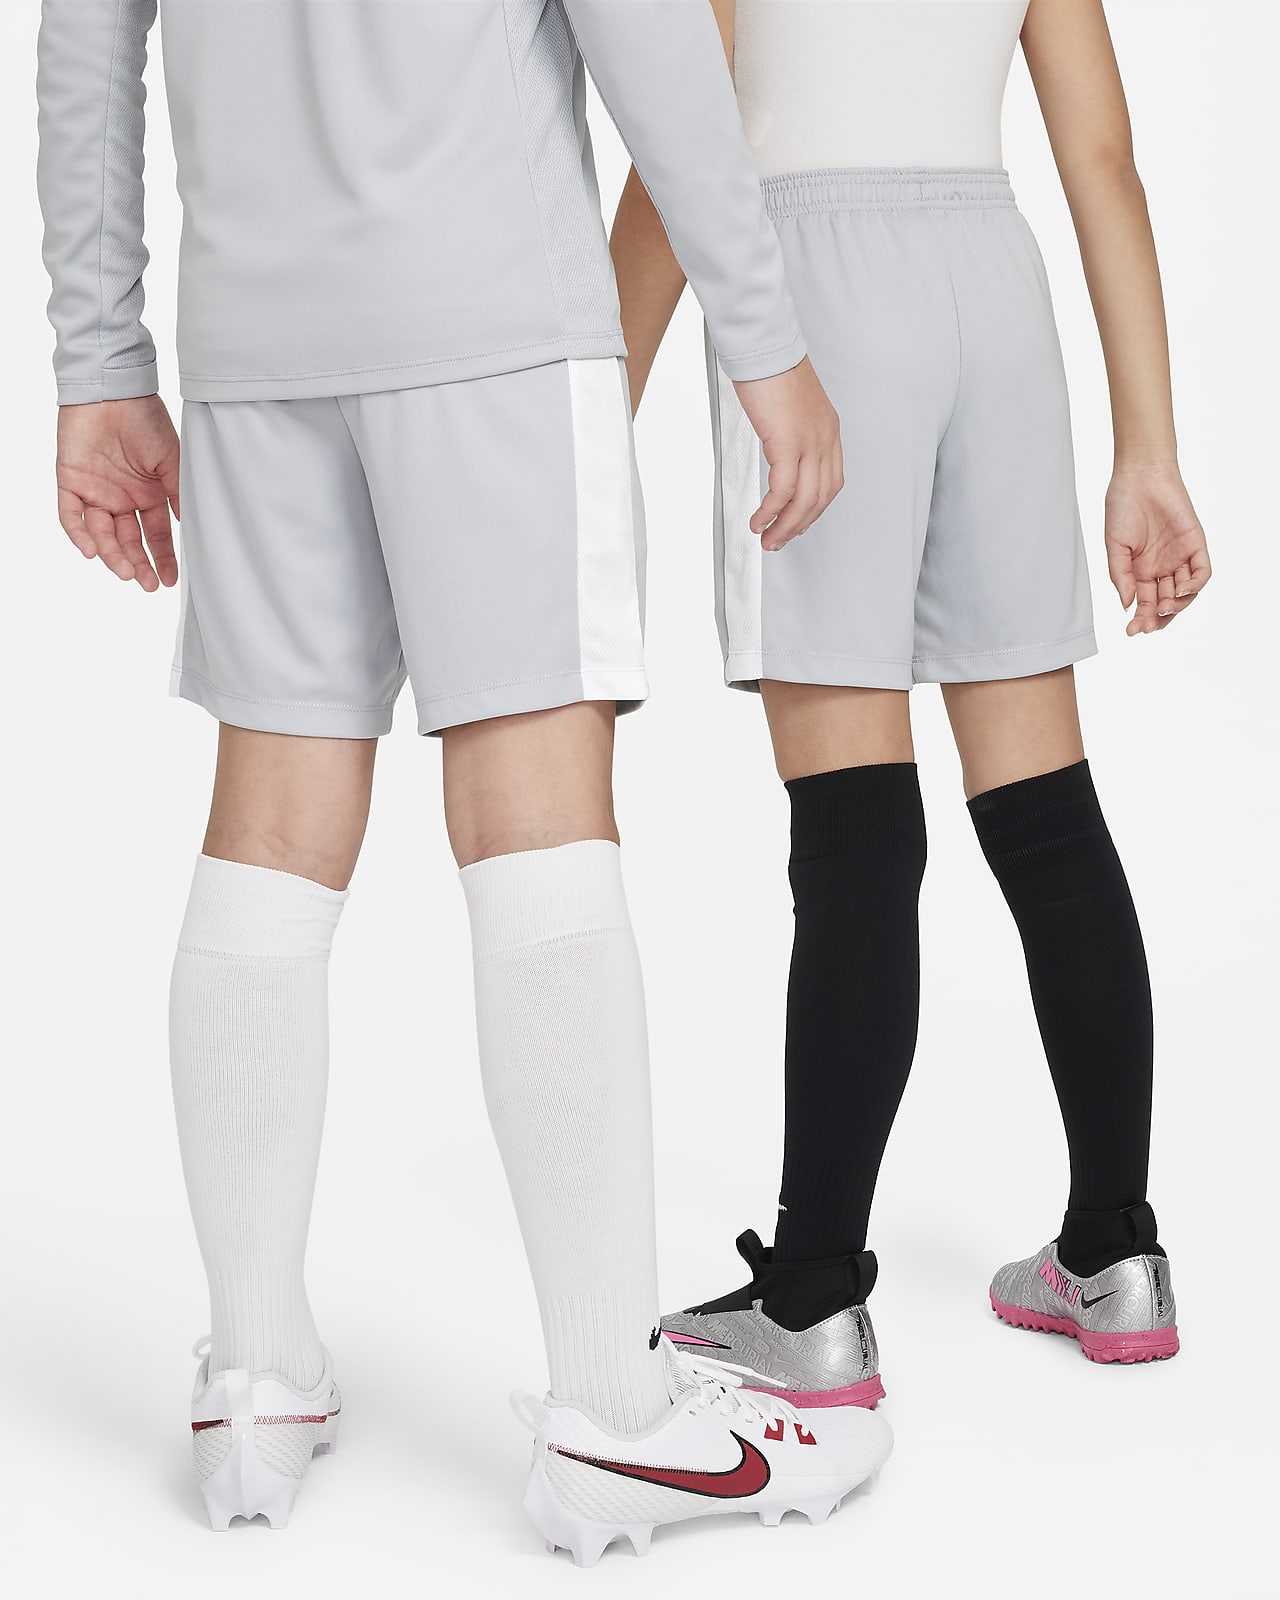 Kids\' Shorts. Dri-FIT Academy23 Nike Soccer